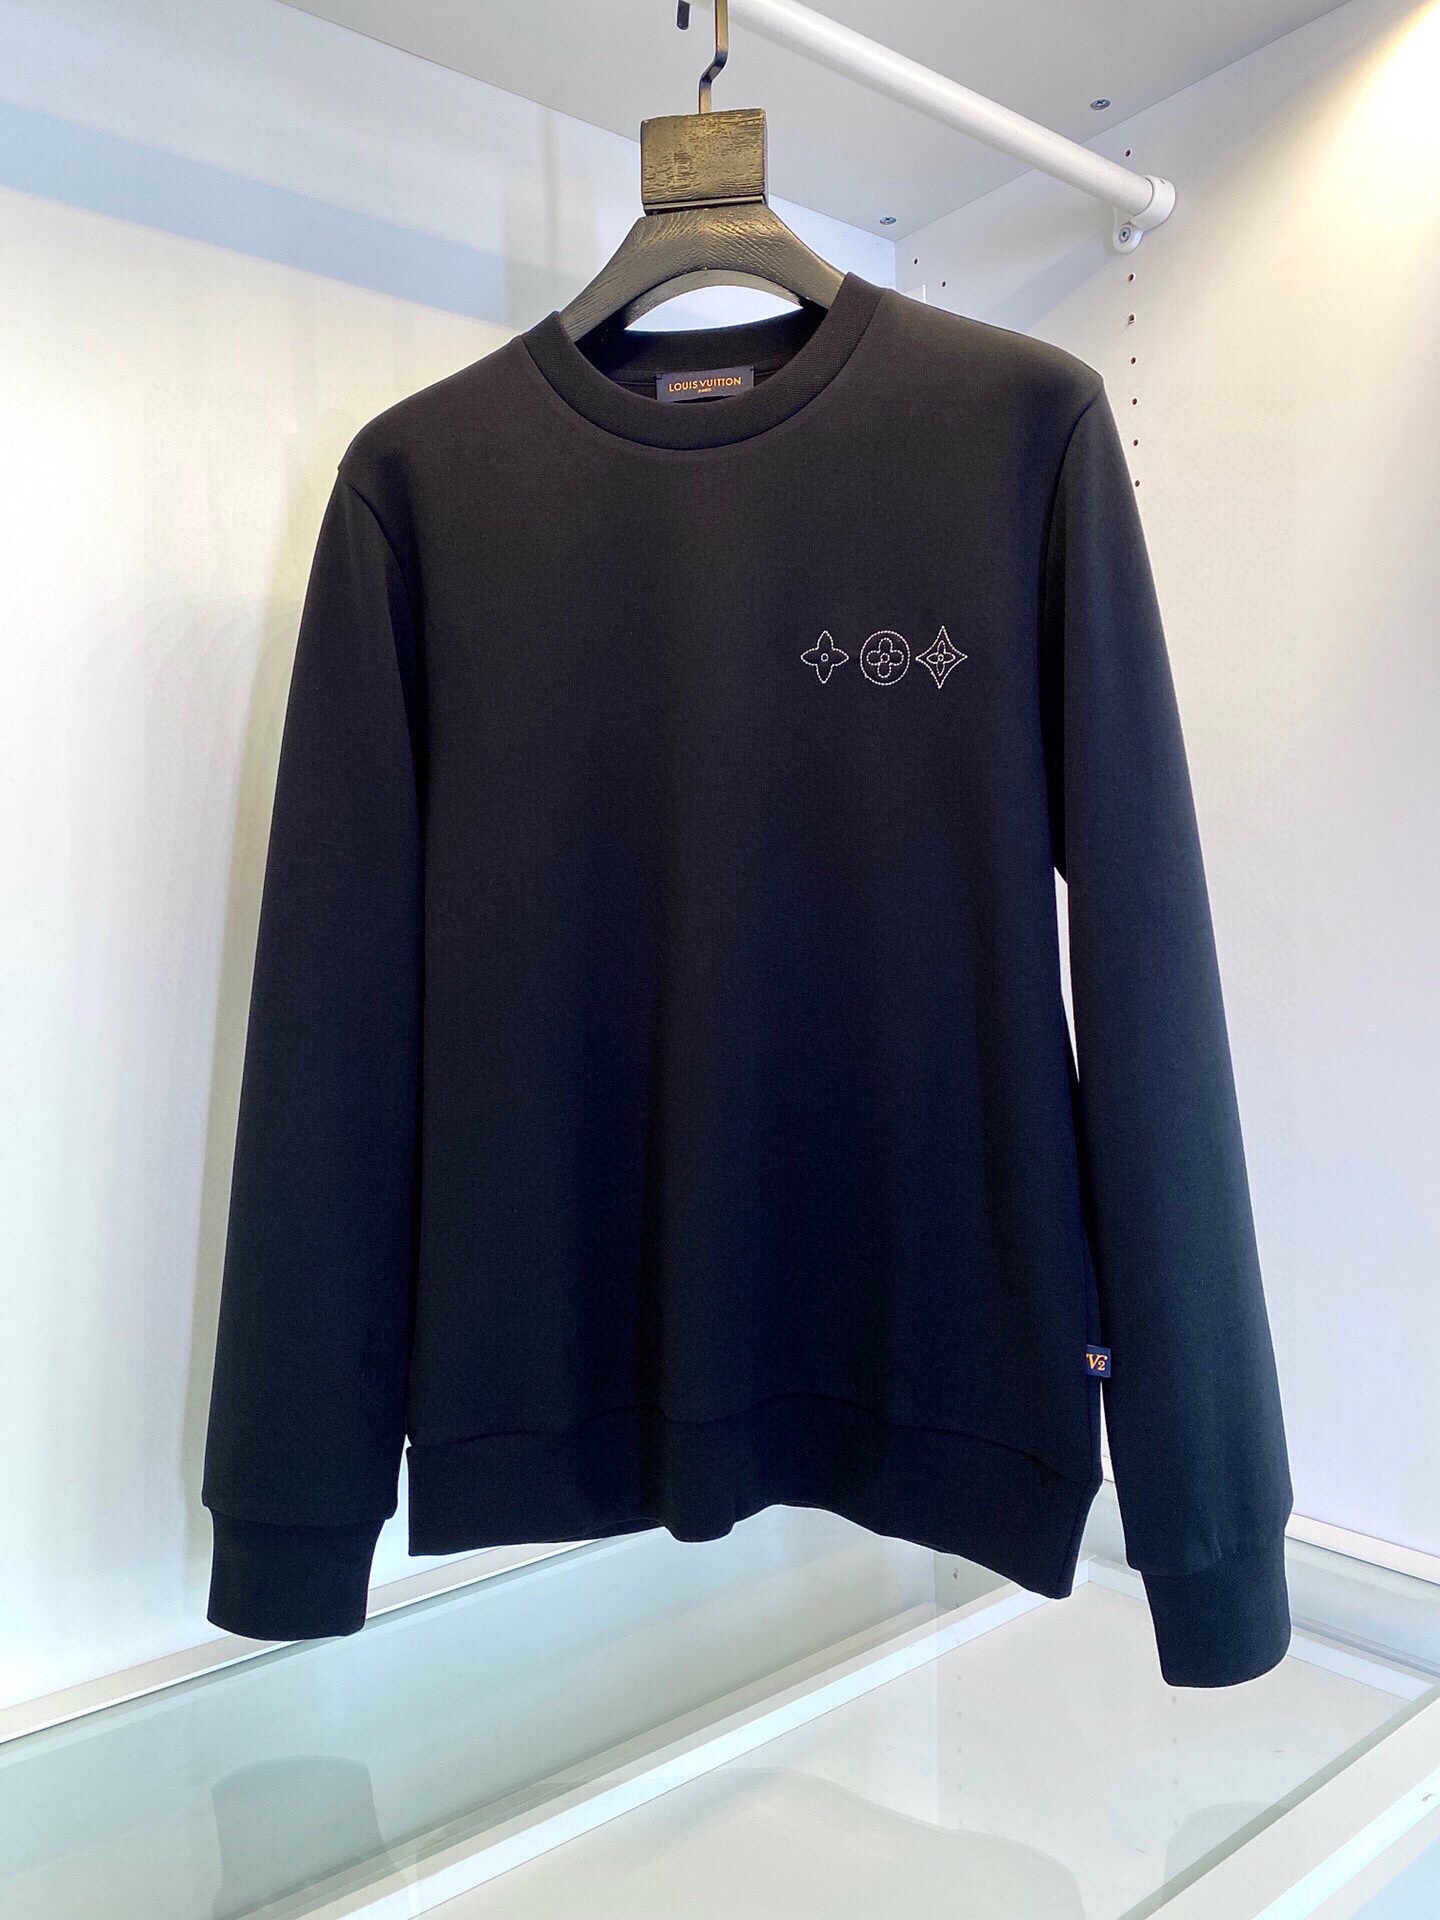 Louis Vuitton Clothing Sweatshirts Replica Online
 Black Grey White Embroidery Fashion